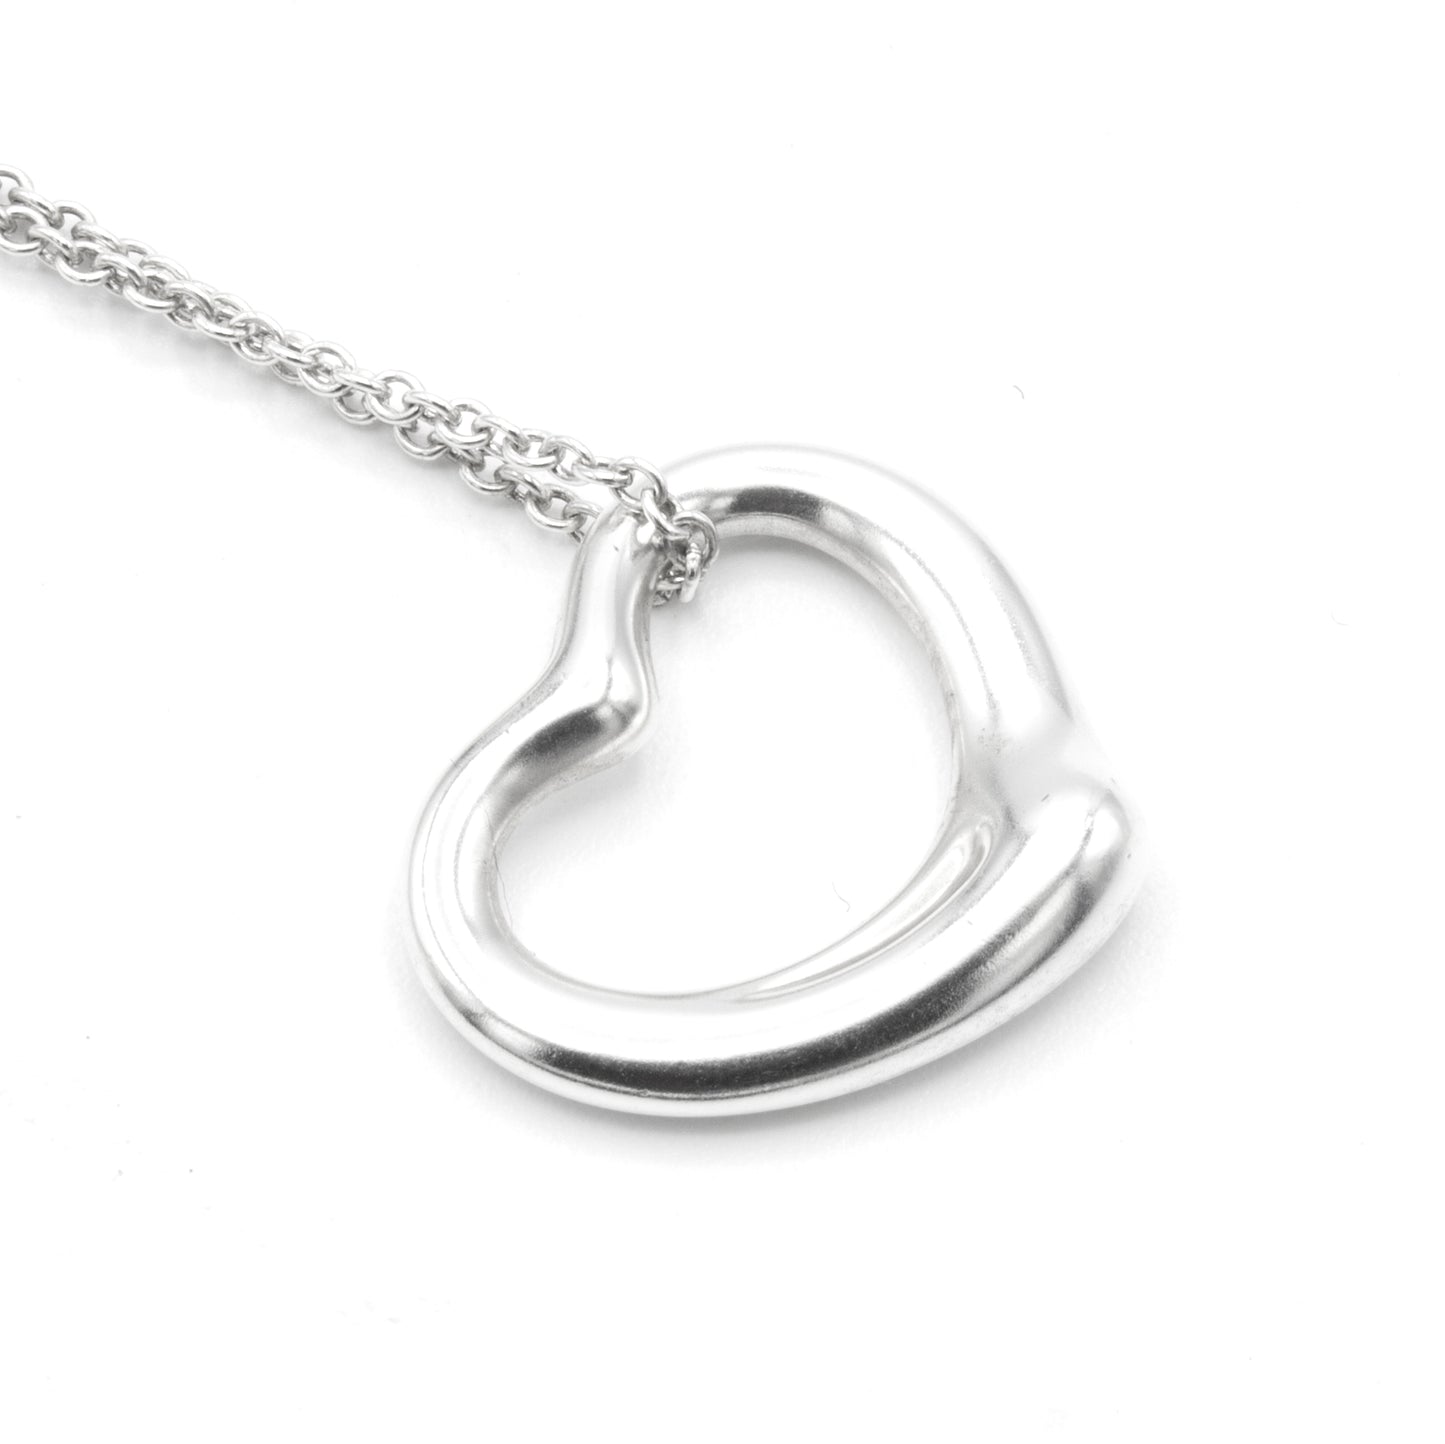 Tiffany & Co Open Heart 22mm necklace